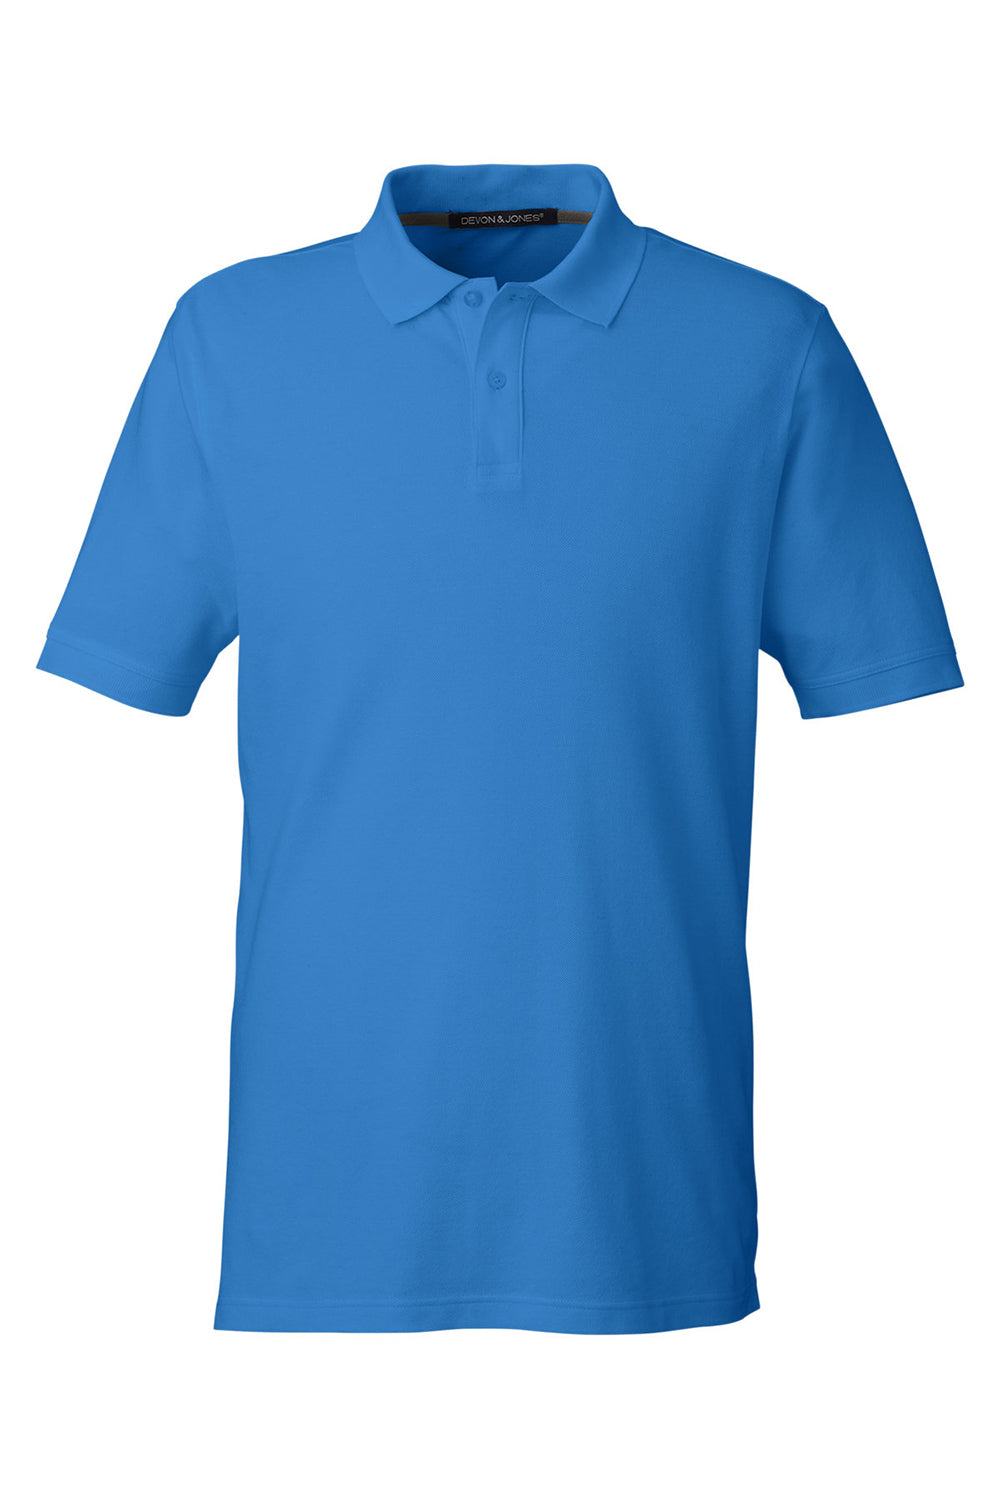 Devon & Jones DG100 Mens New Classics Performance Moisture Wicking Short Sleeve Polo Shirt French Blue Flat Front